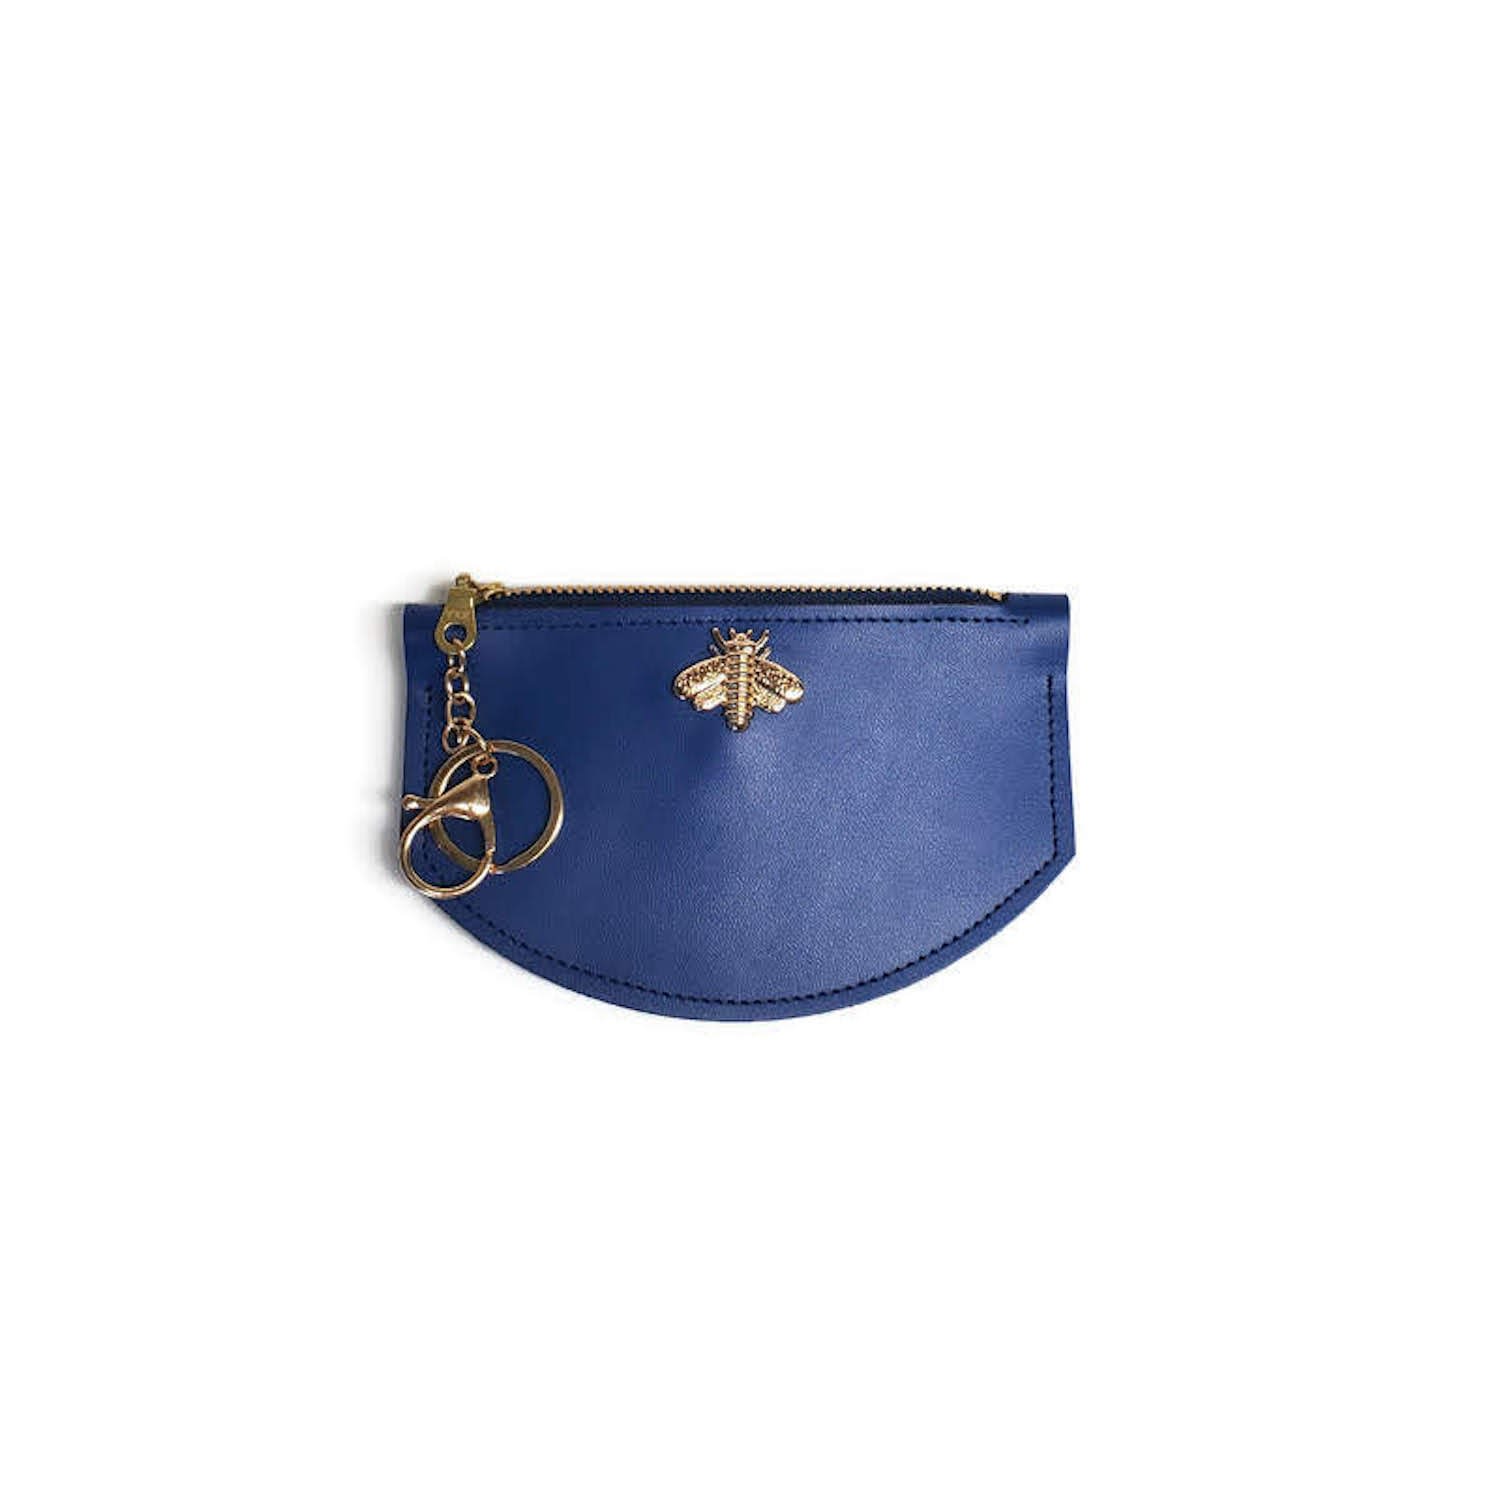 Angela Valentine Handbags - Bee Wallet In Royal Blue